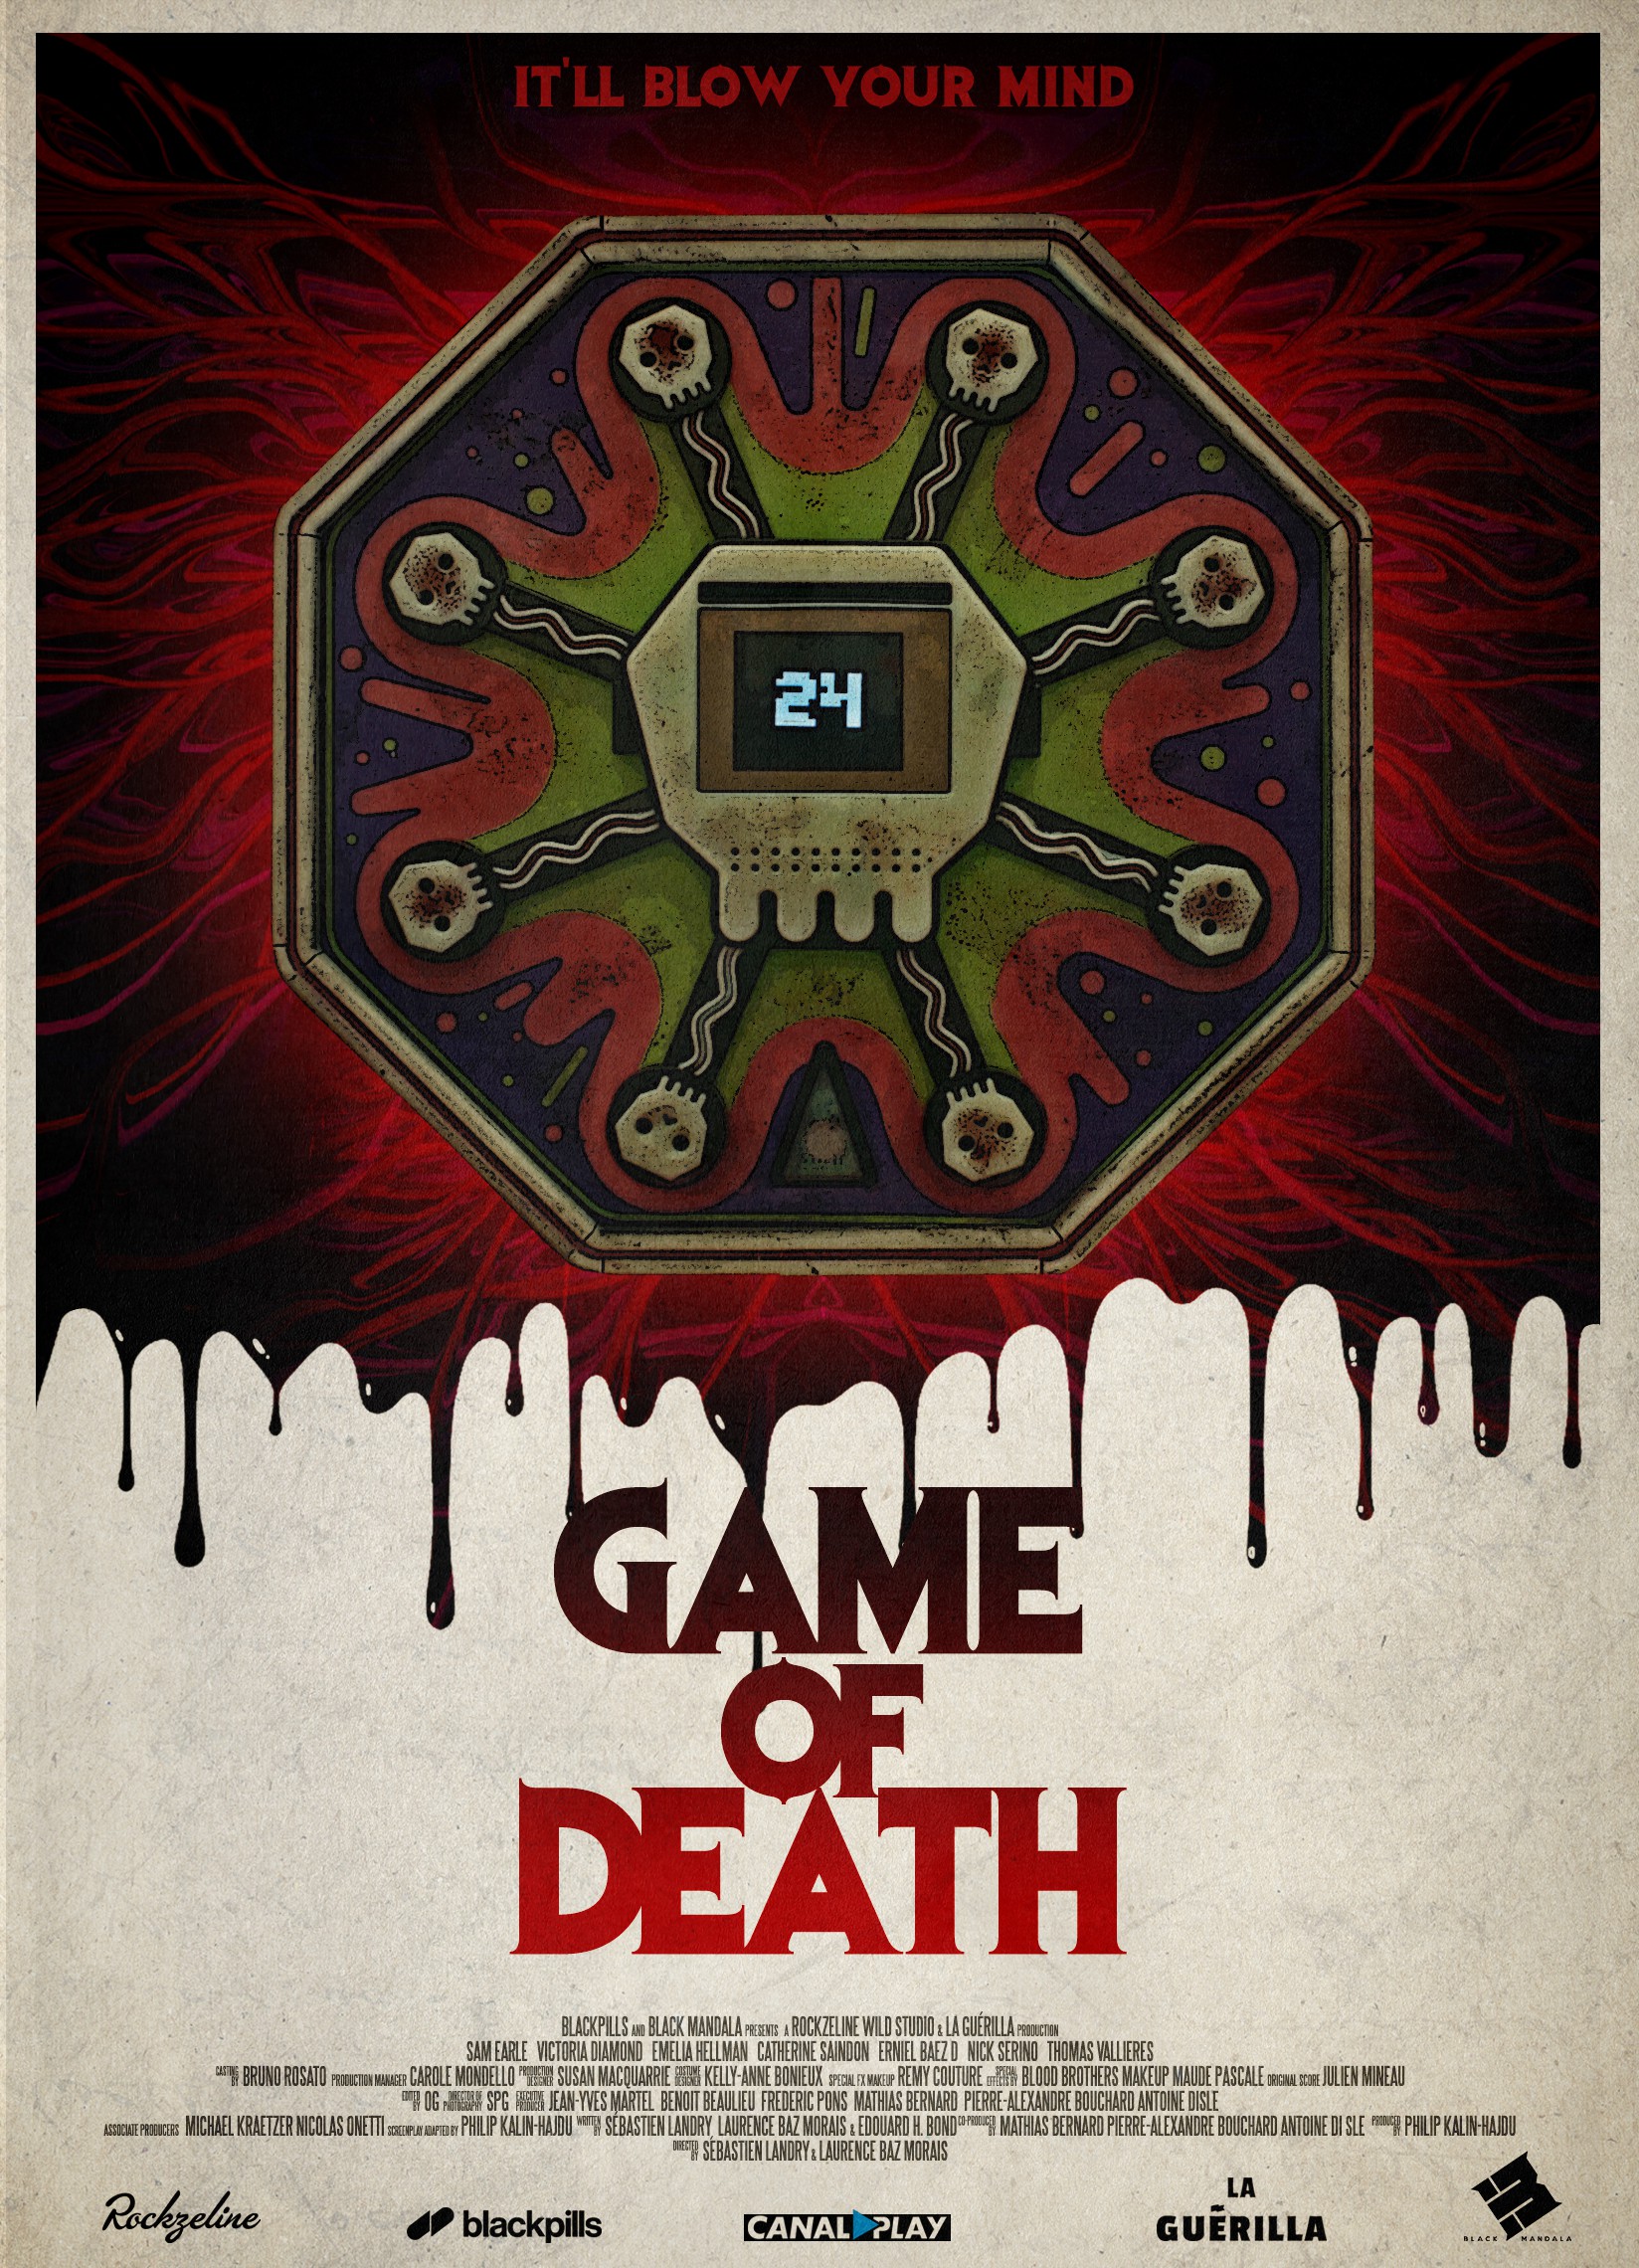 Game of Death (2017) เกมแห่งความตาย